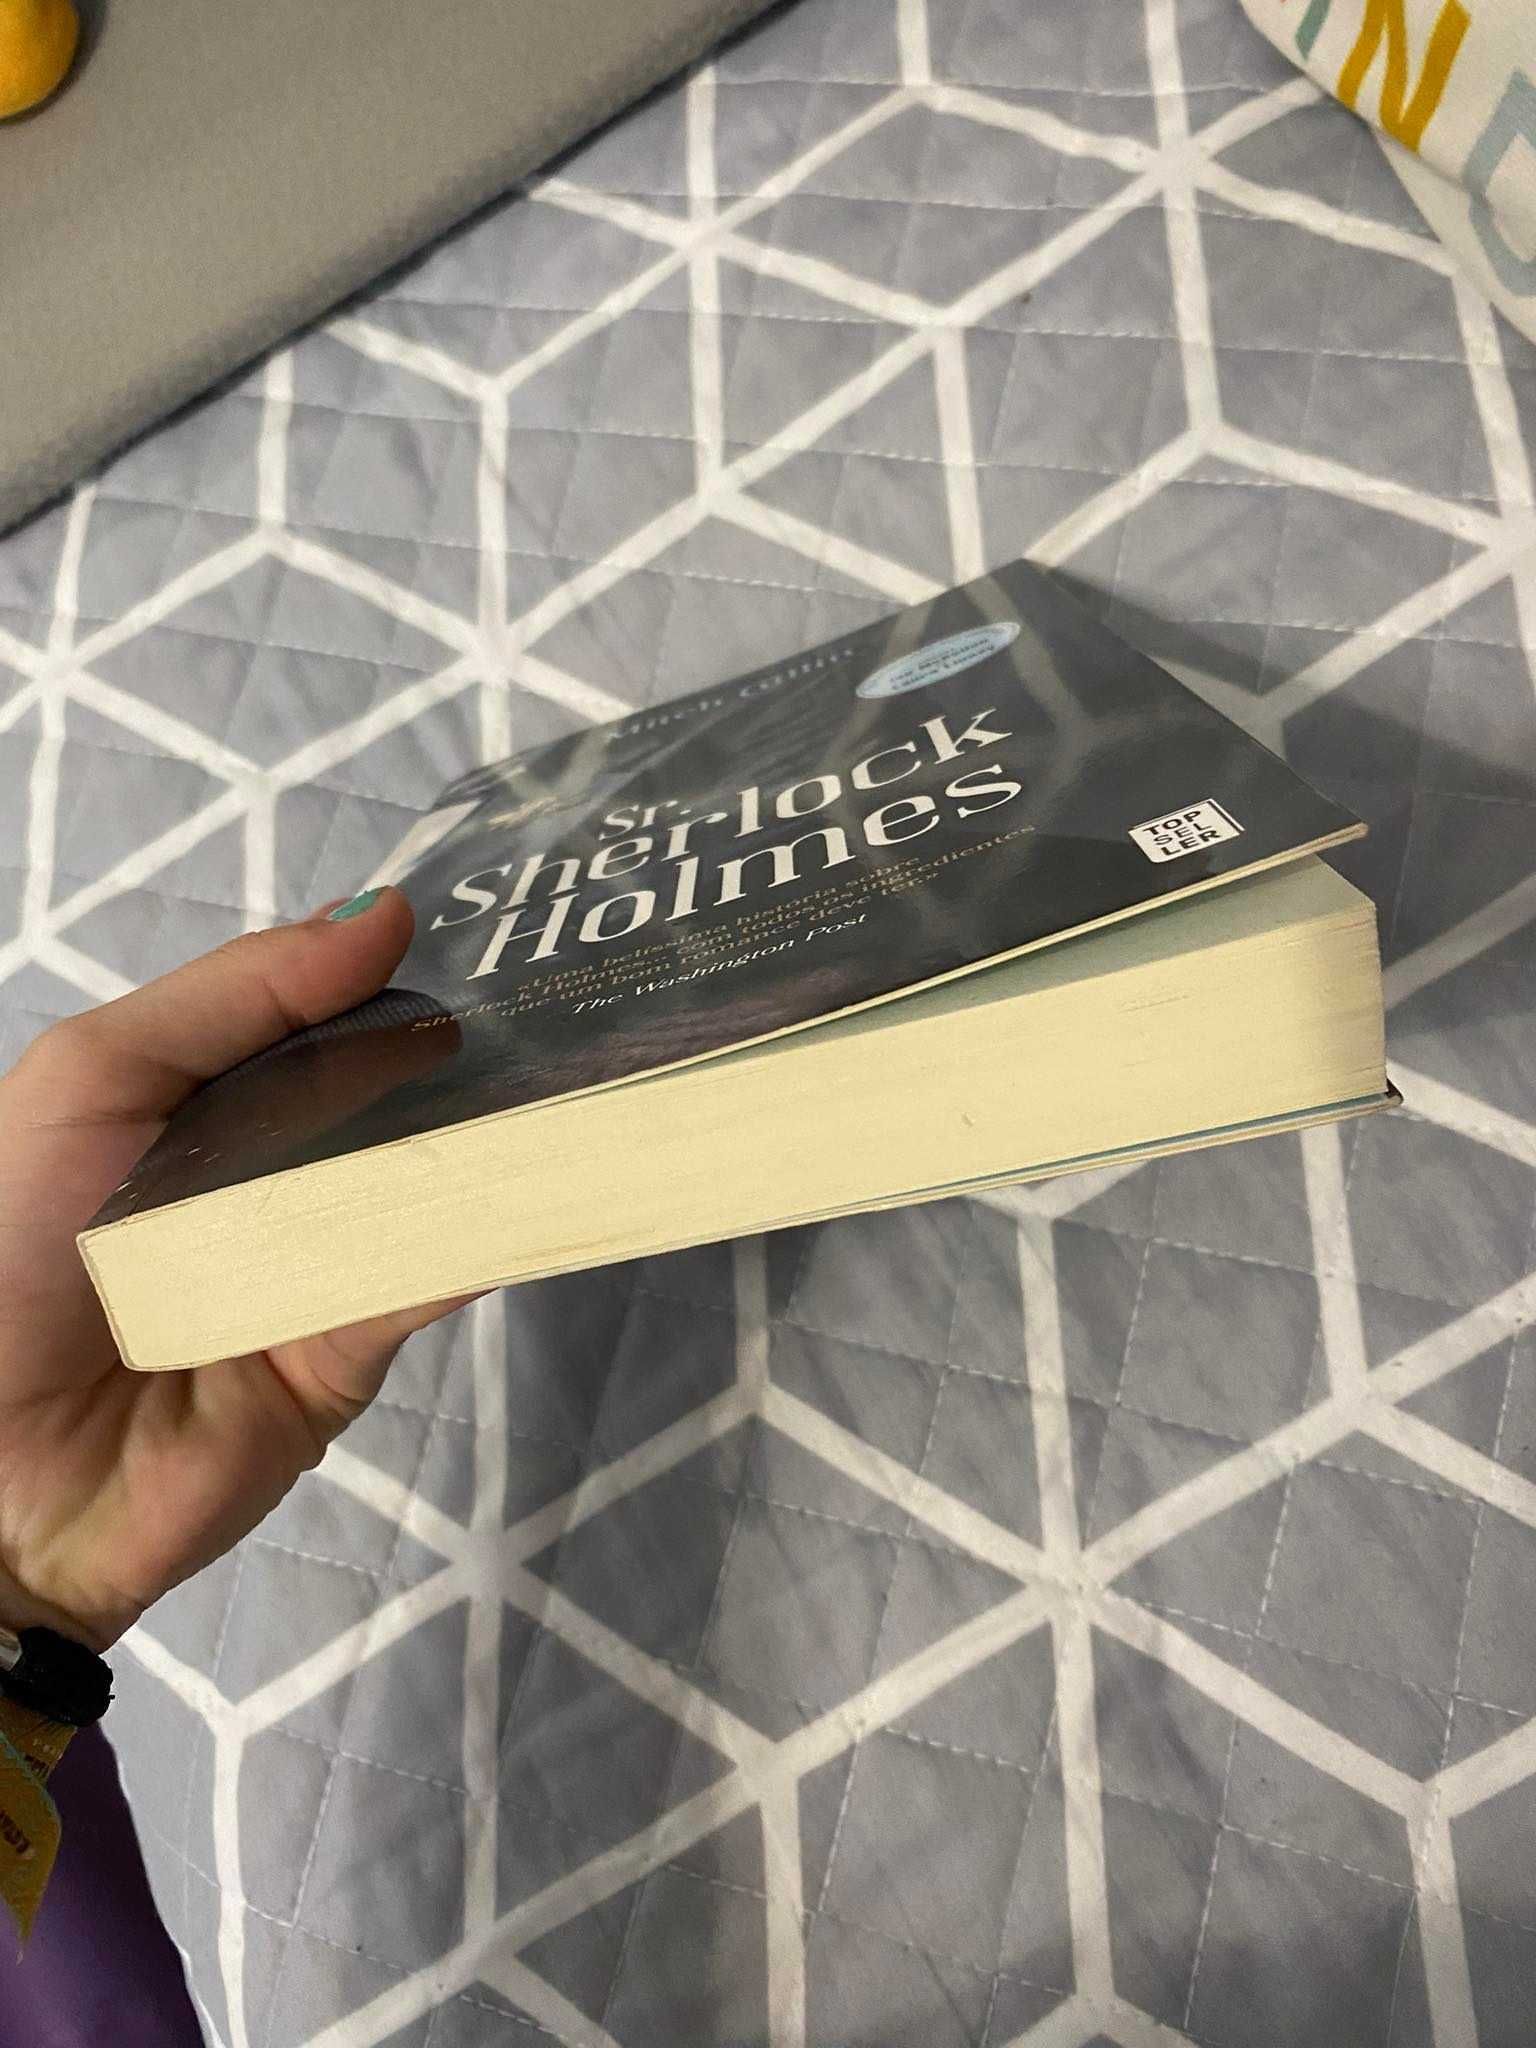 Livro Sr. Sherlock Holmes